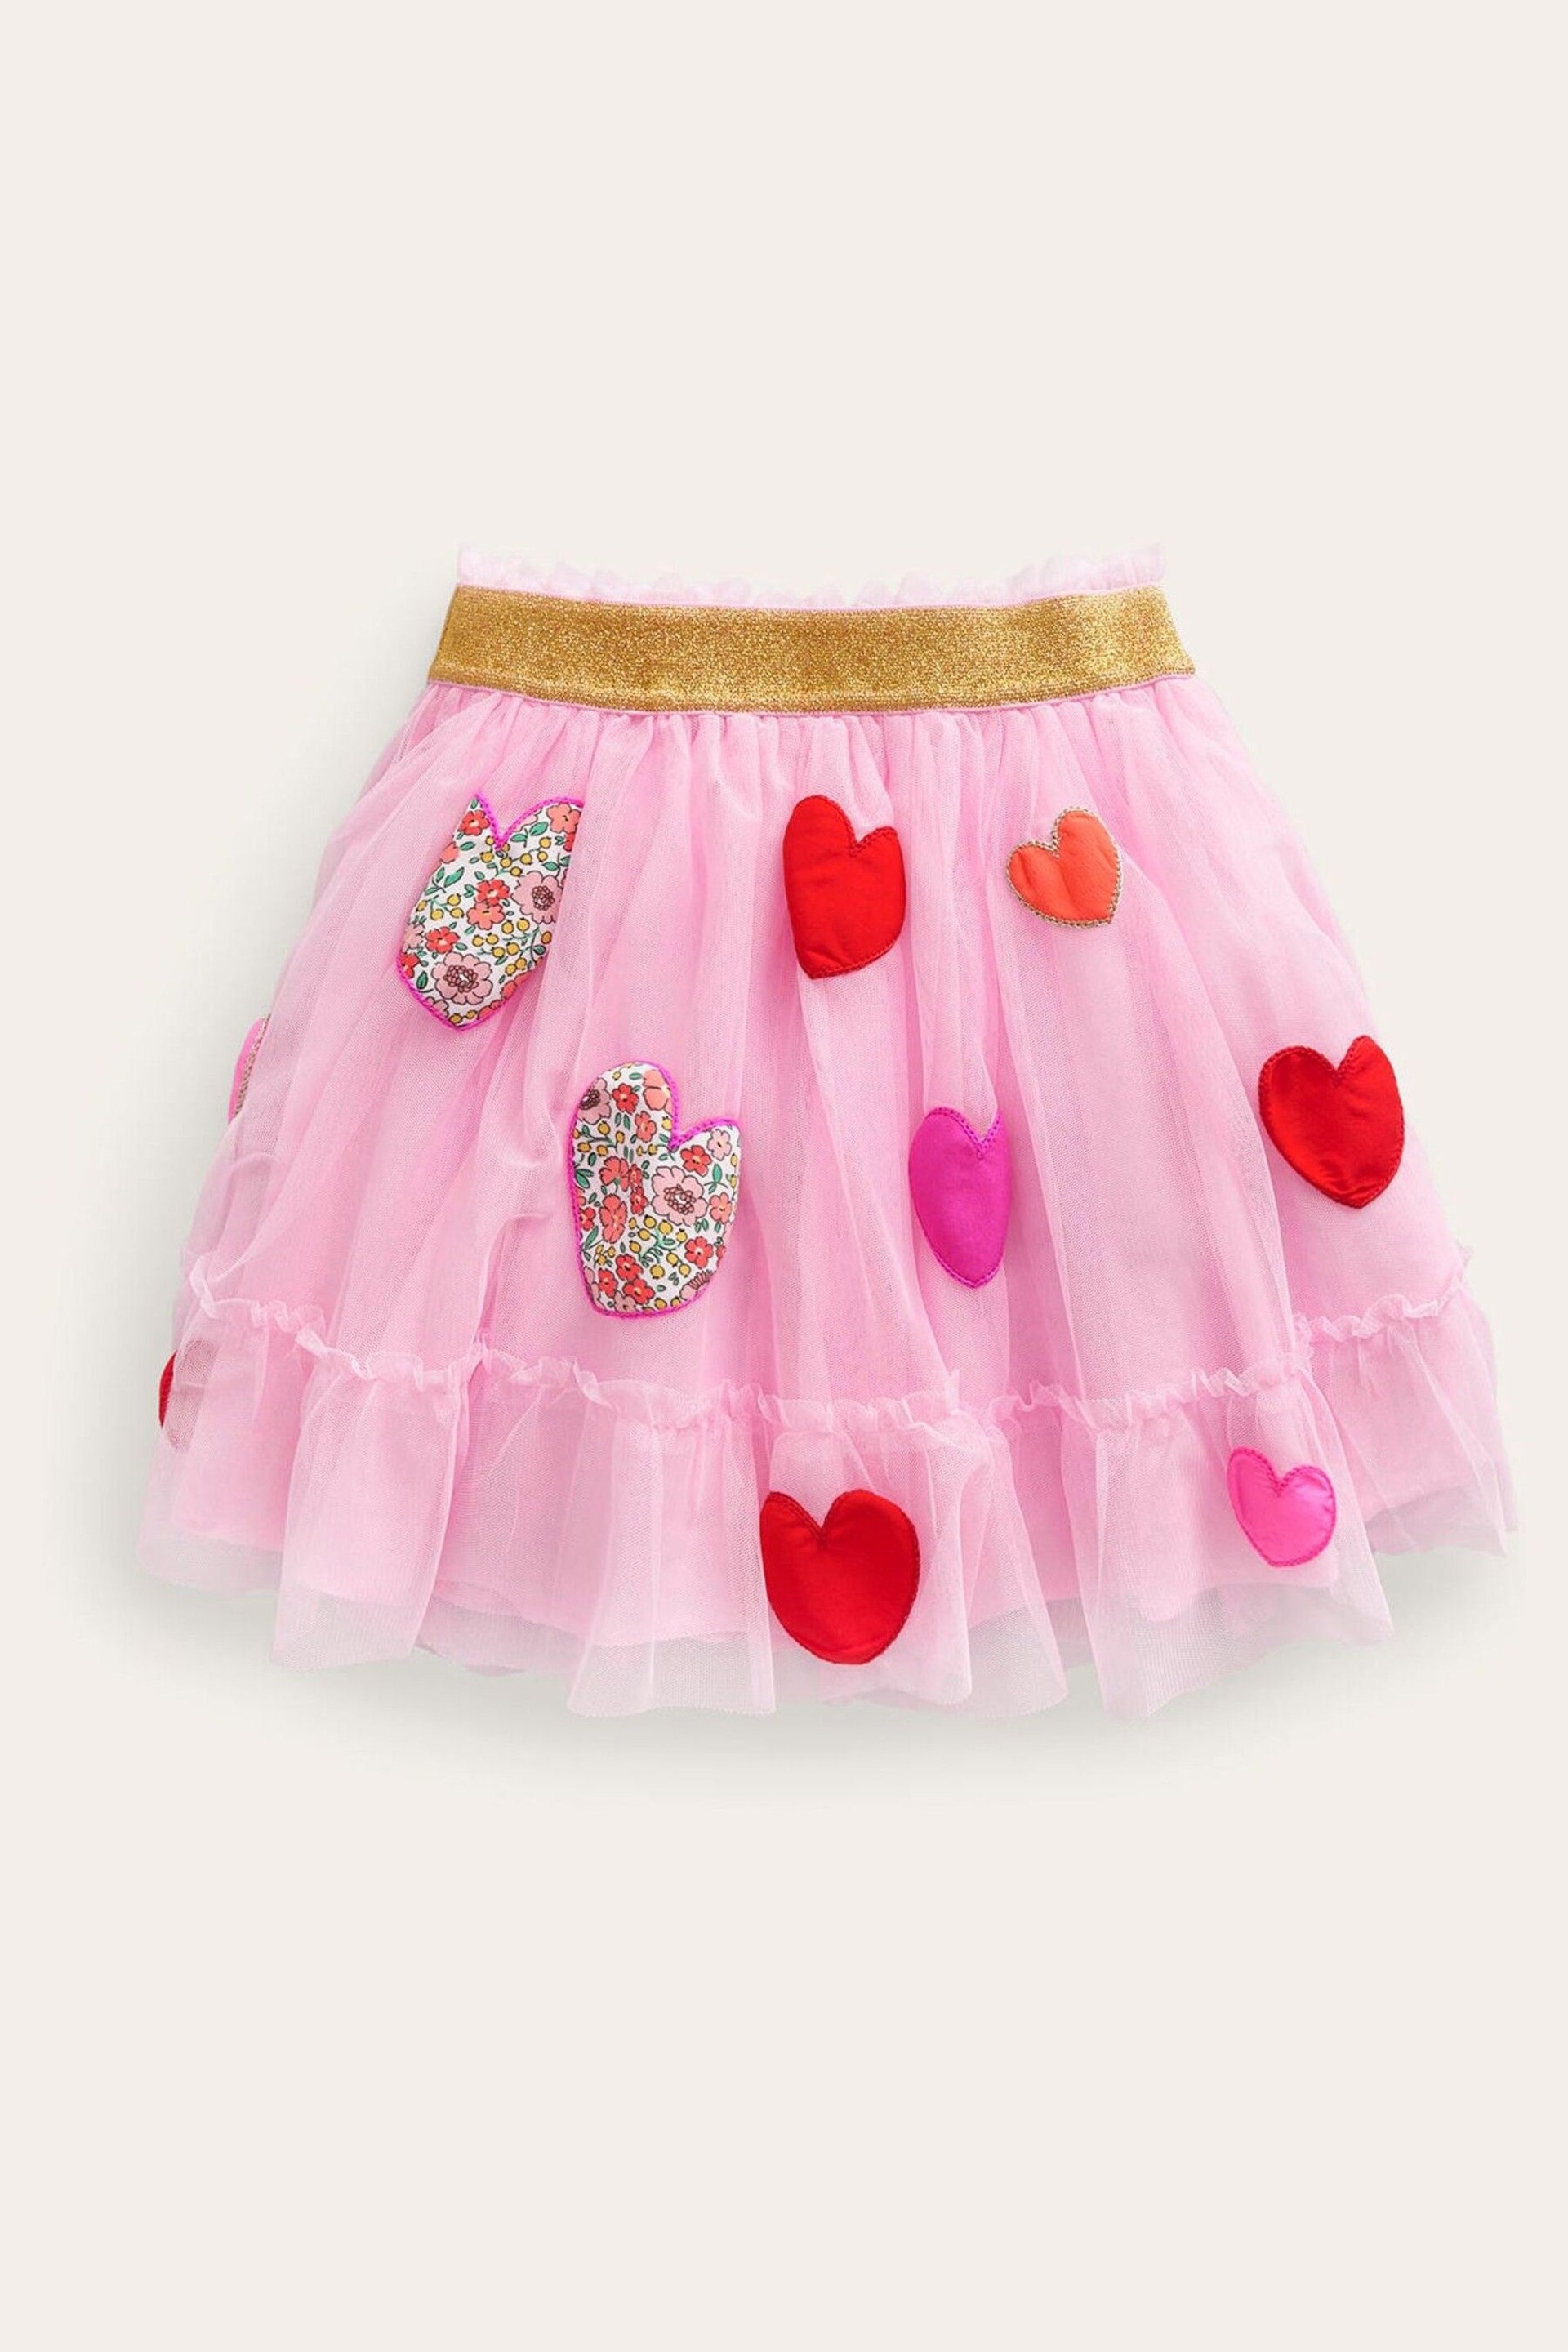 Boden Red Heart Tulle Appliqué Skirt - Image 2 of 4